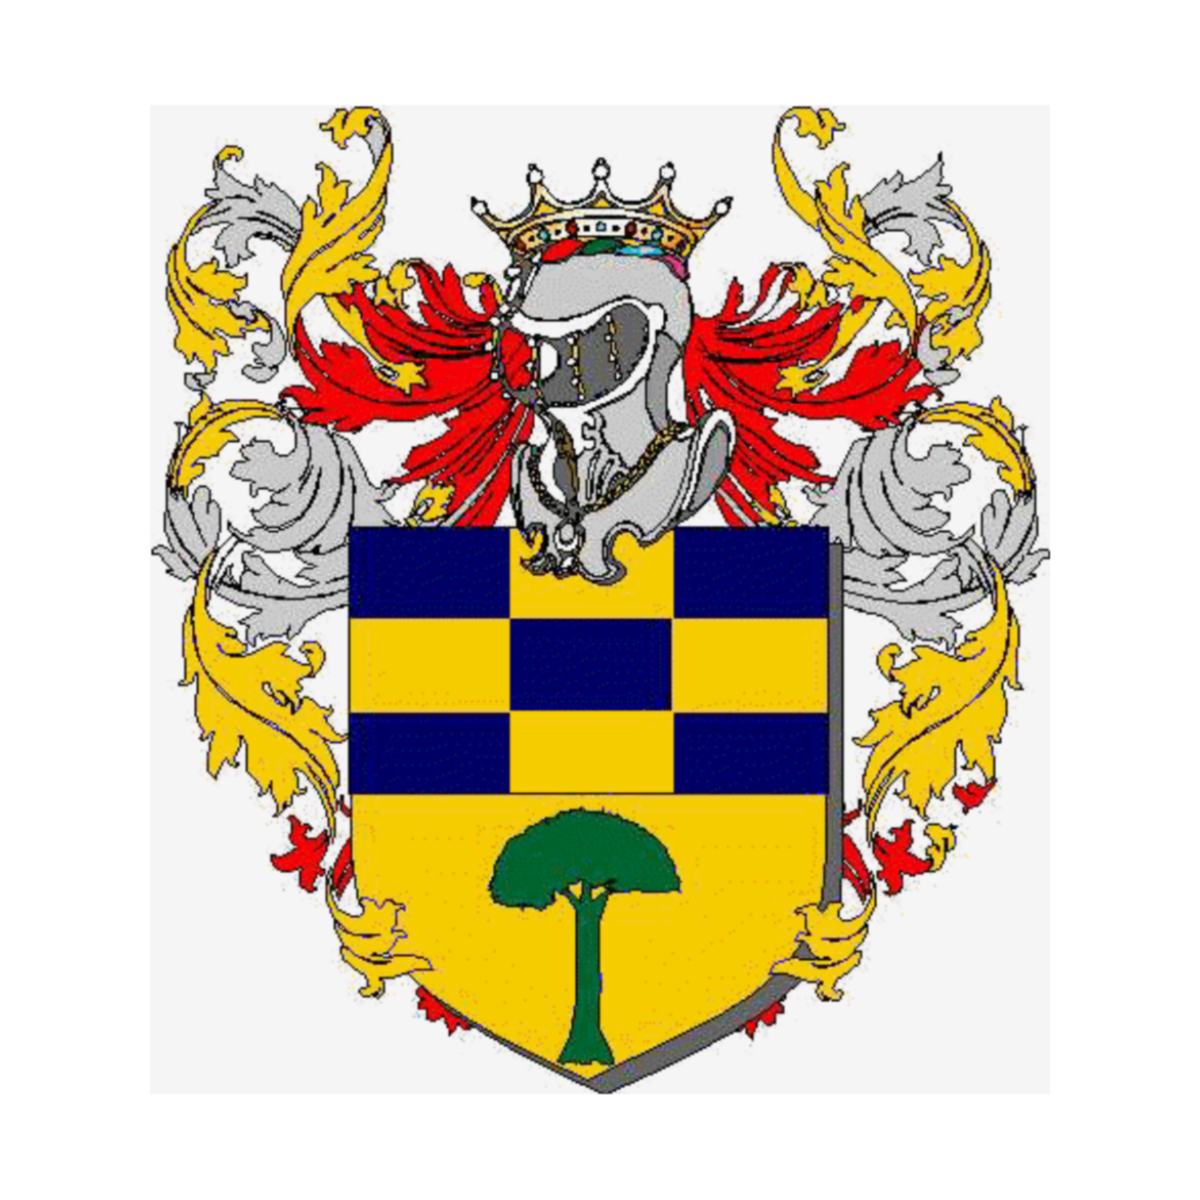 Wappen der Familie Stoppaccioli